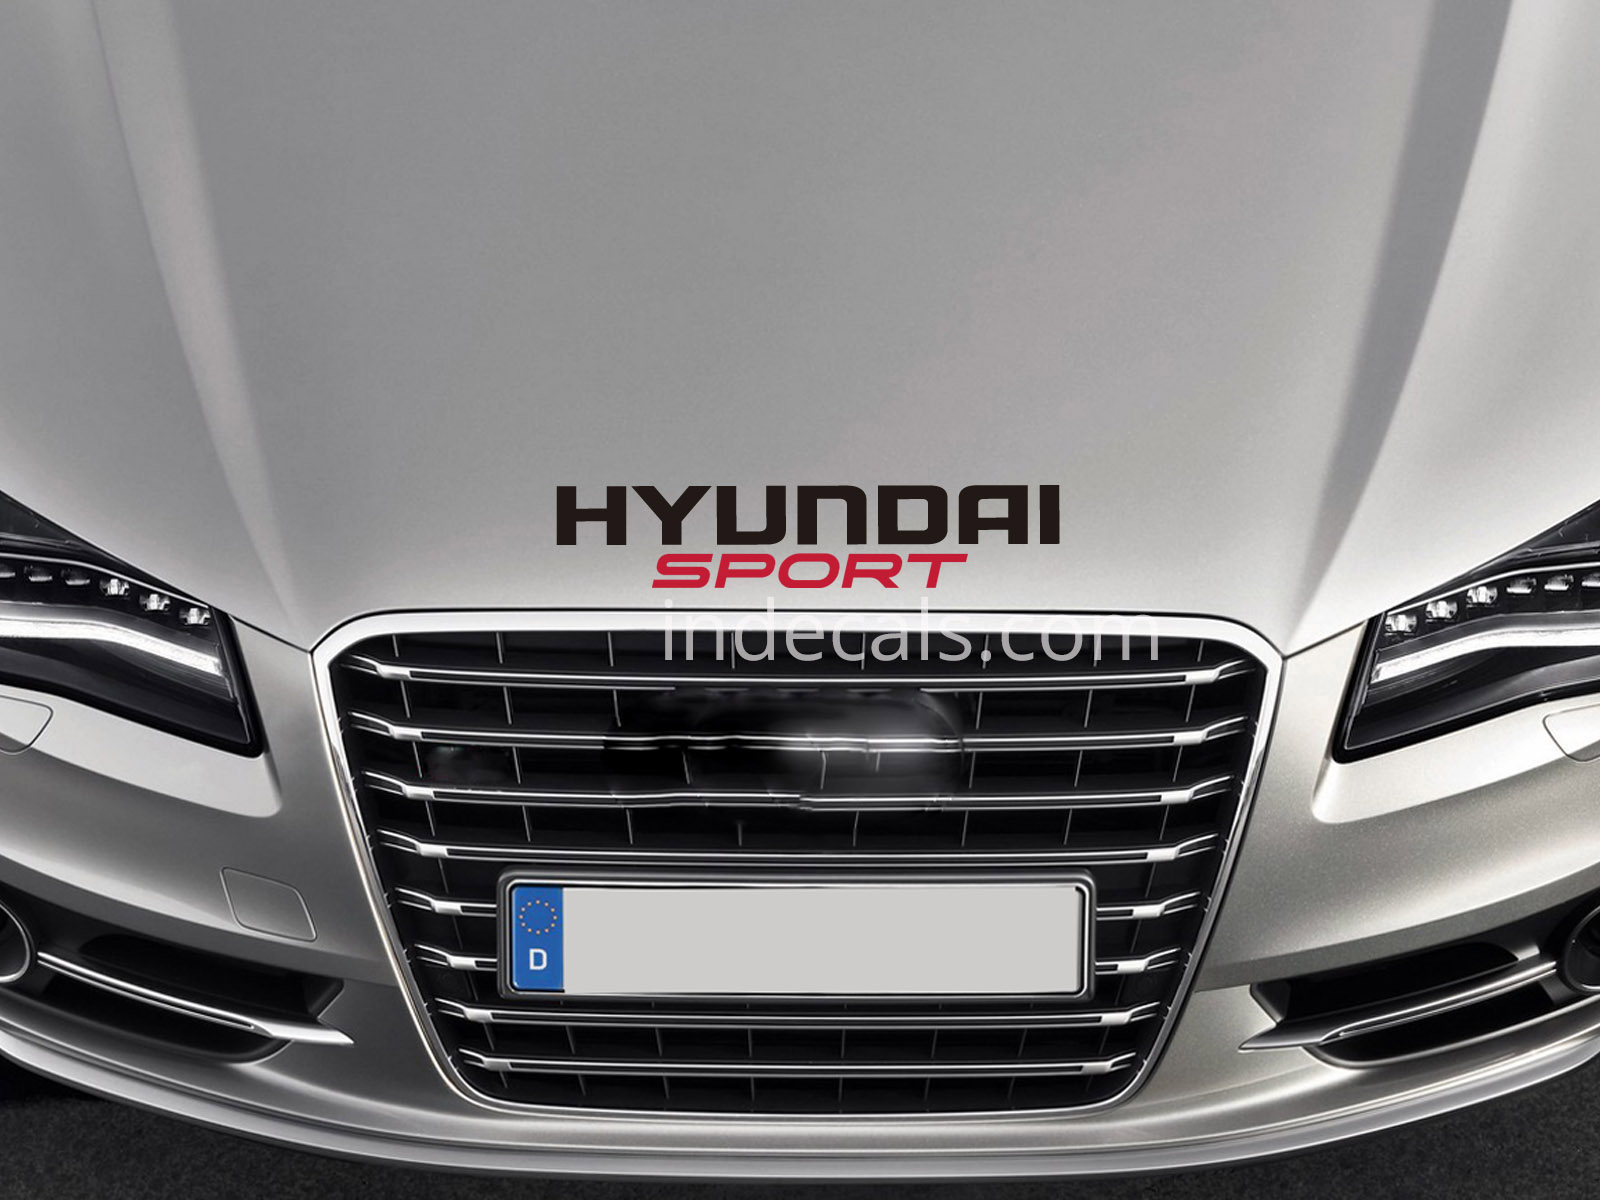 1 x Hyundai Sport Sticker for Bonnet - Black & Red